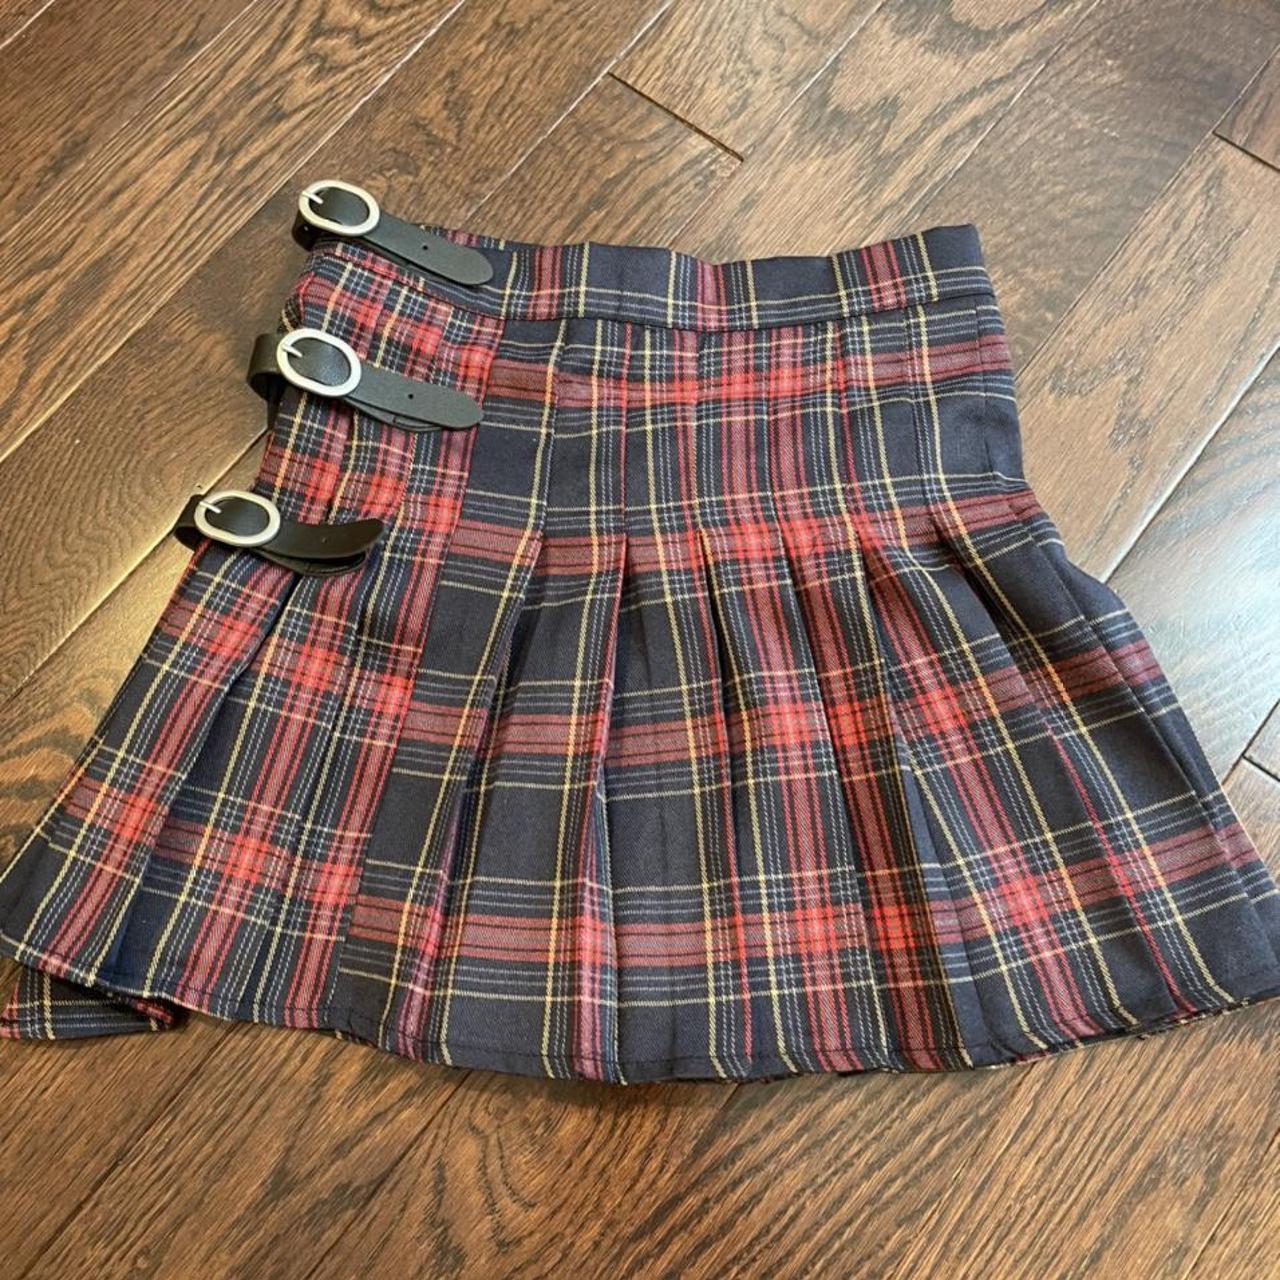 Product Image 1 - Plaid Mini Skirt (color may